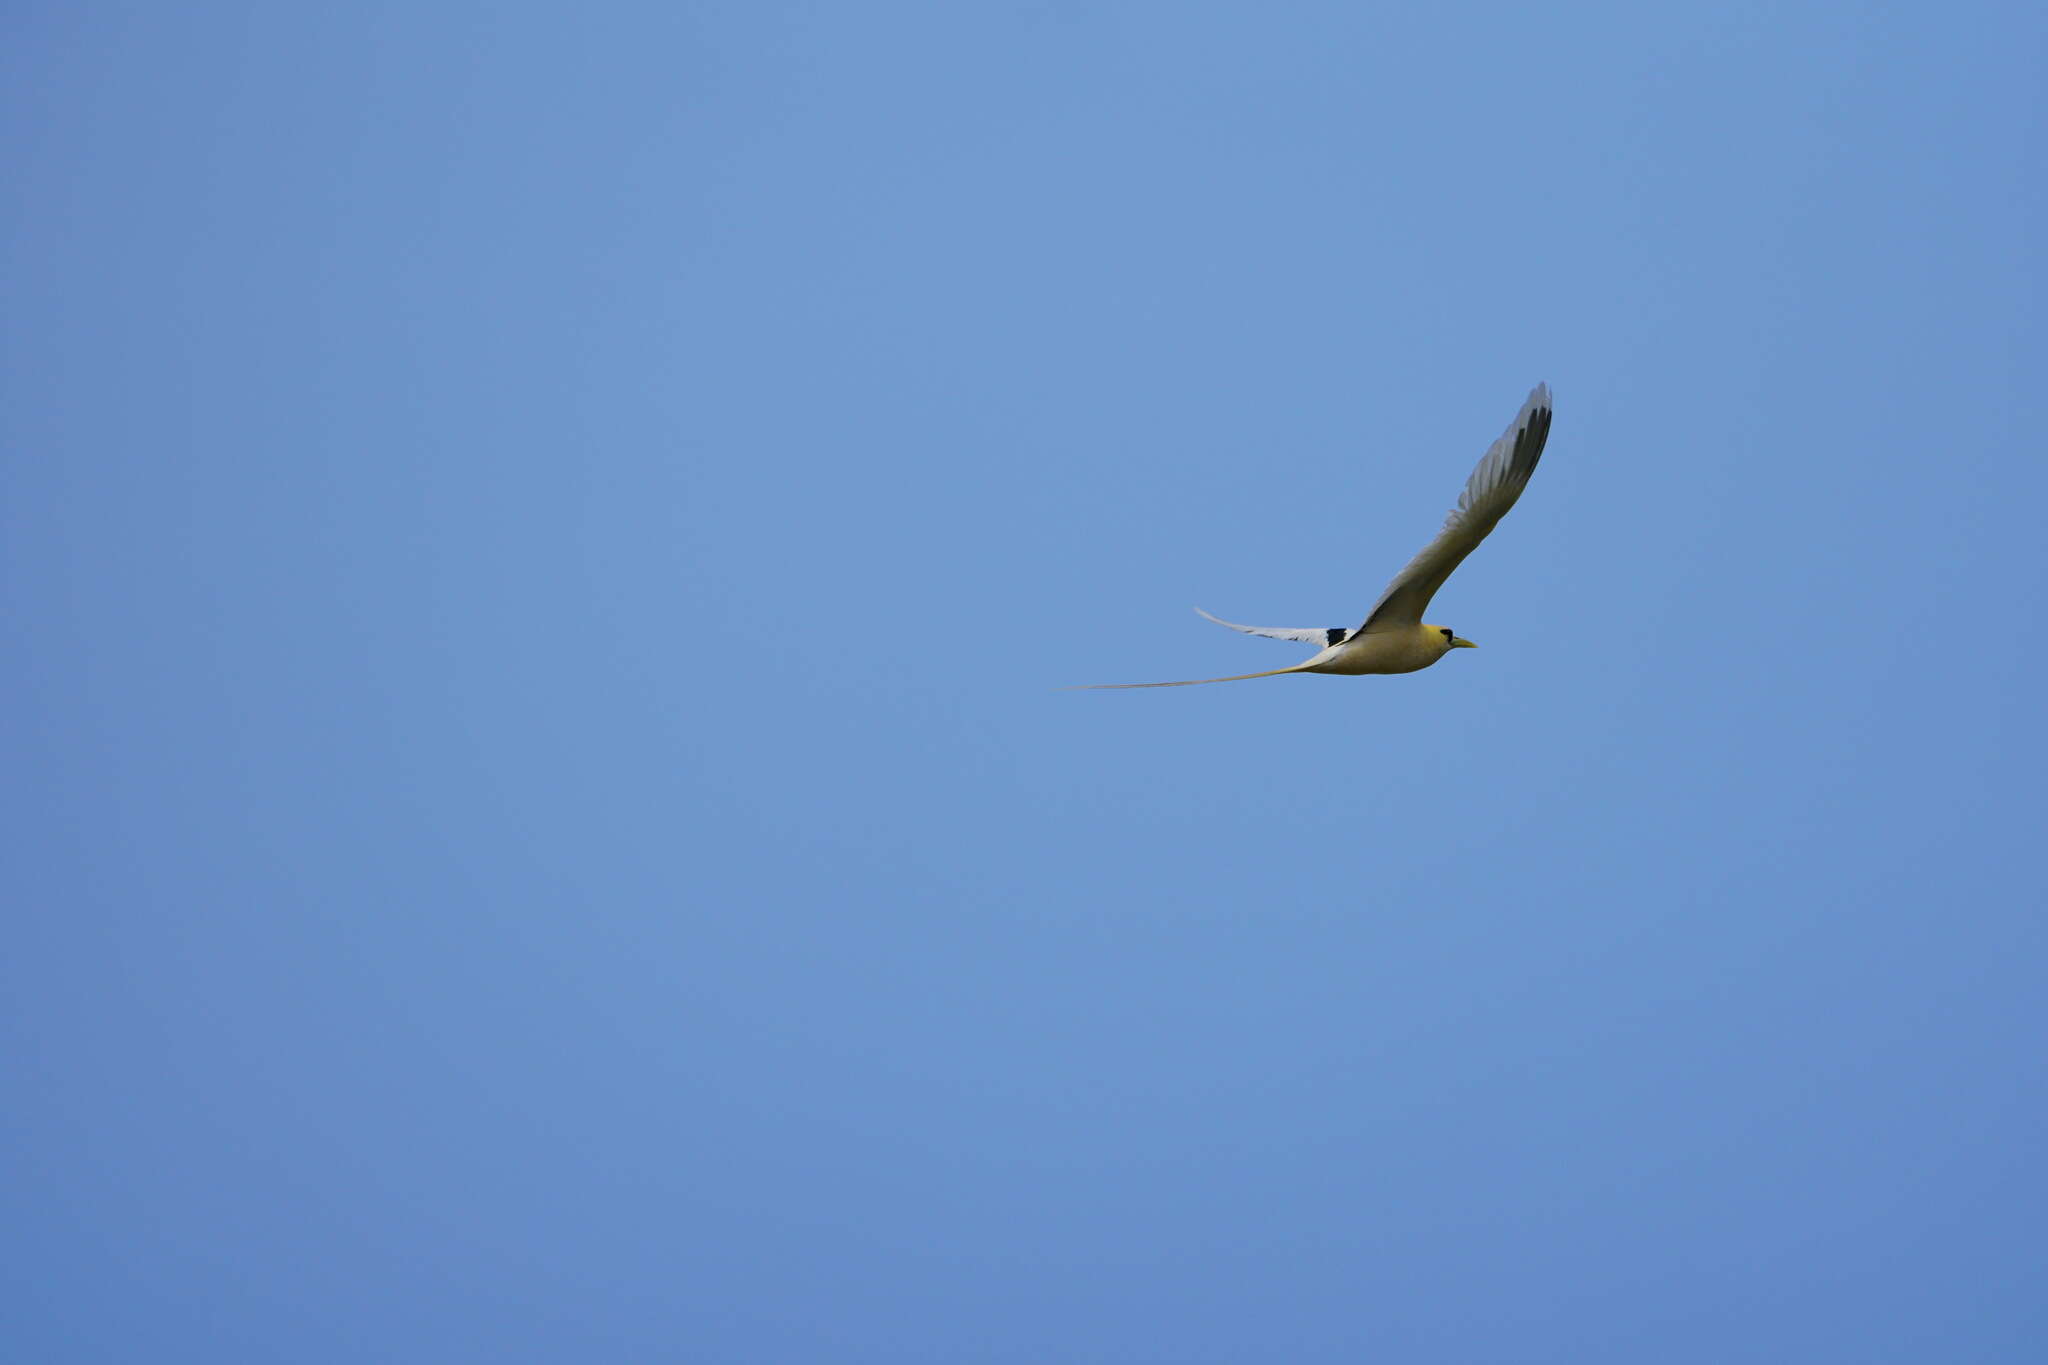 Image of golden bosunbird